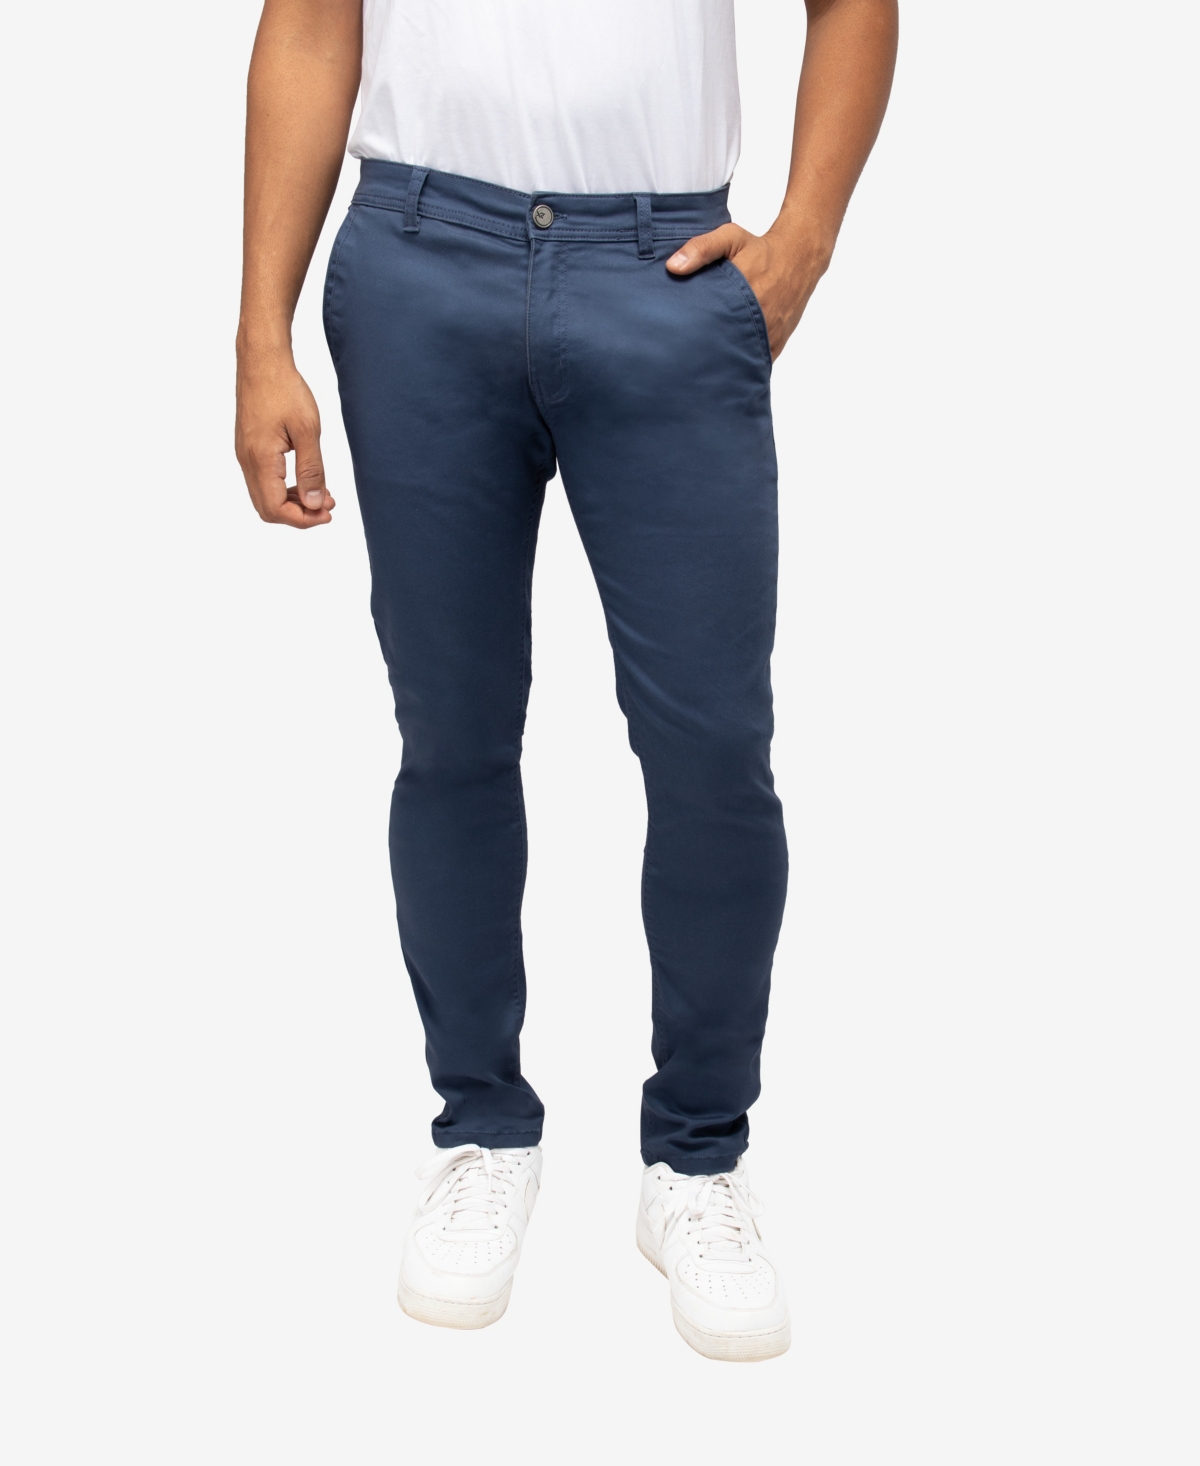 Men's Five Pocket Commuter Pants - Grey